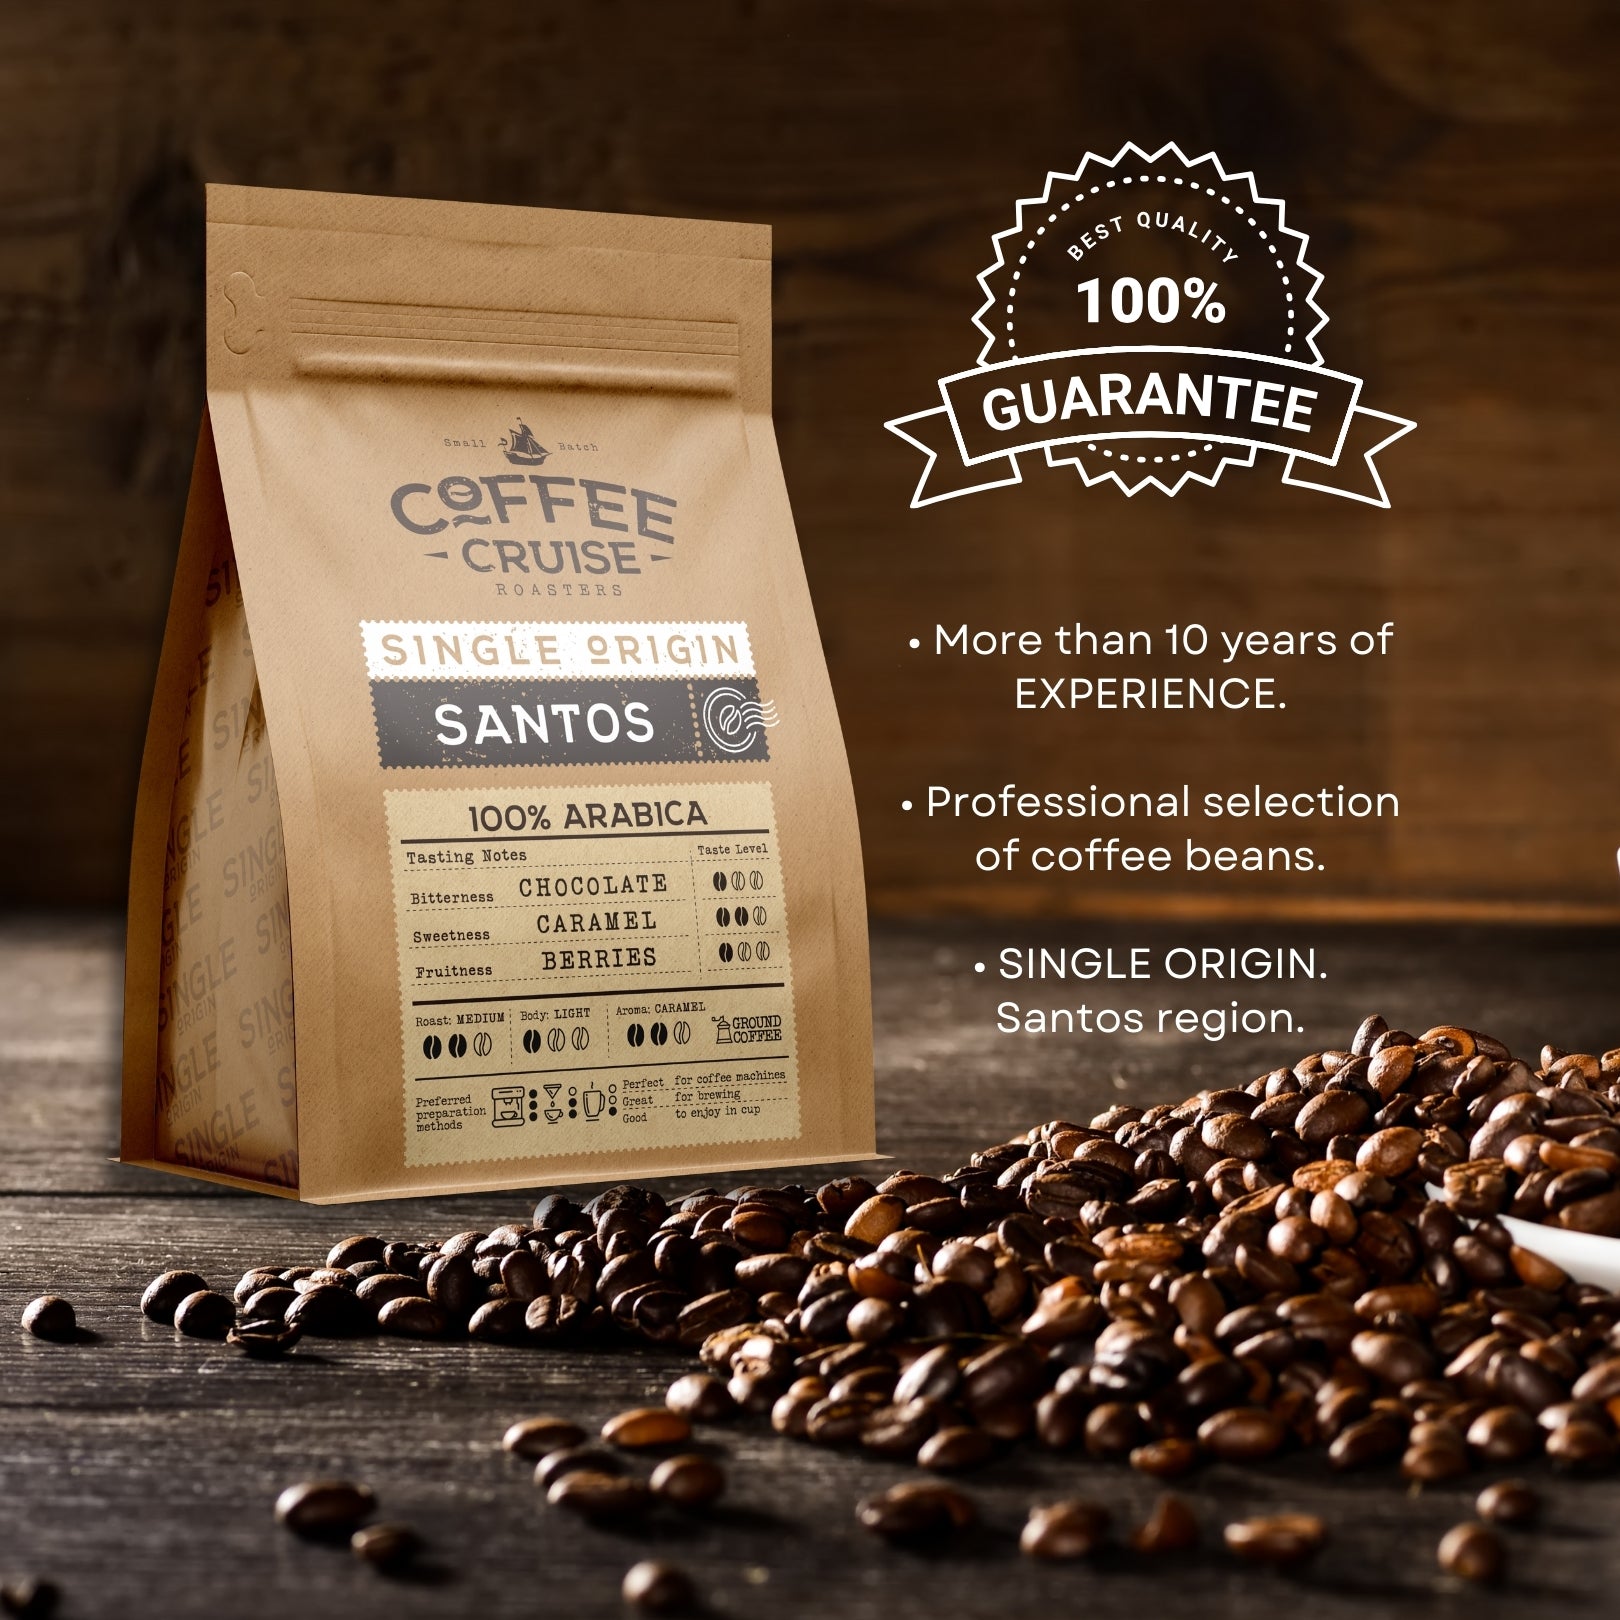  Santos Coffee cruise, lukata ground coffee uk, 100 Arabica